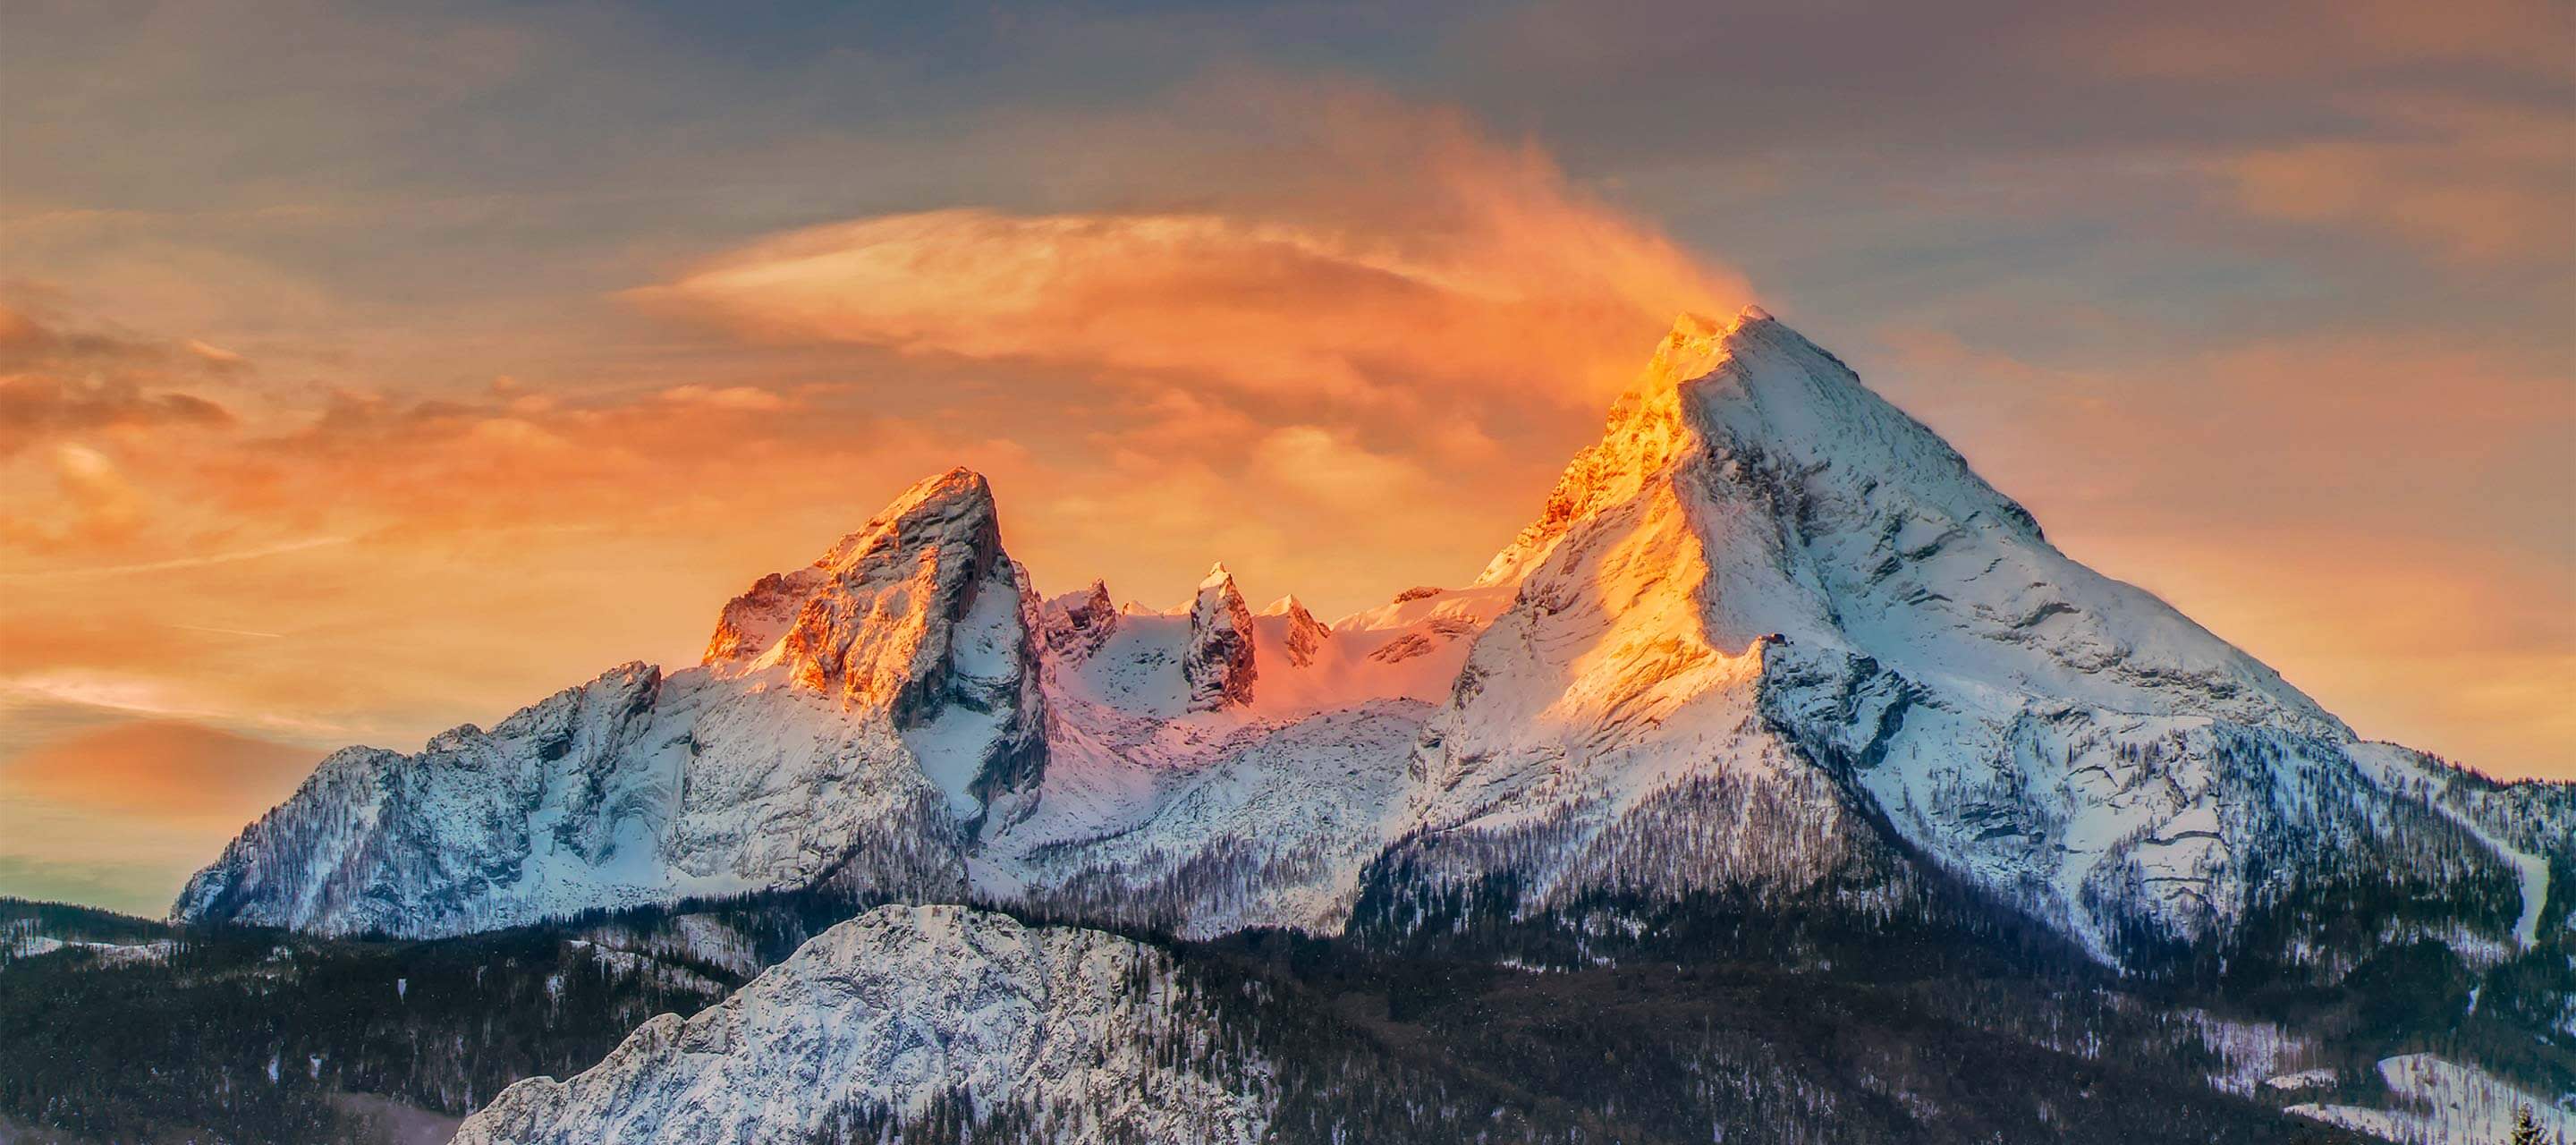 mountain with orange sunset